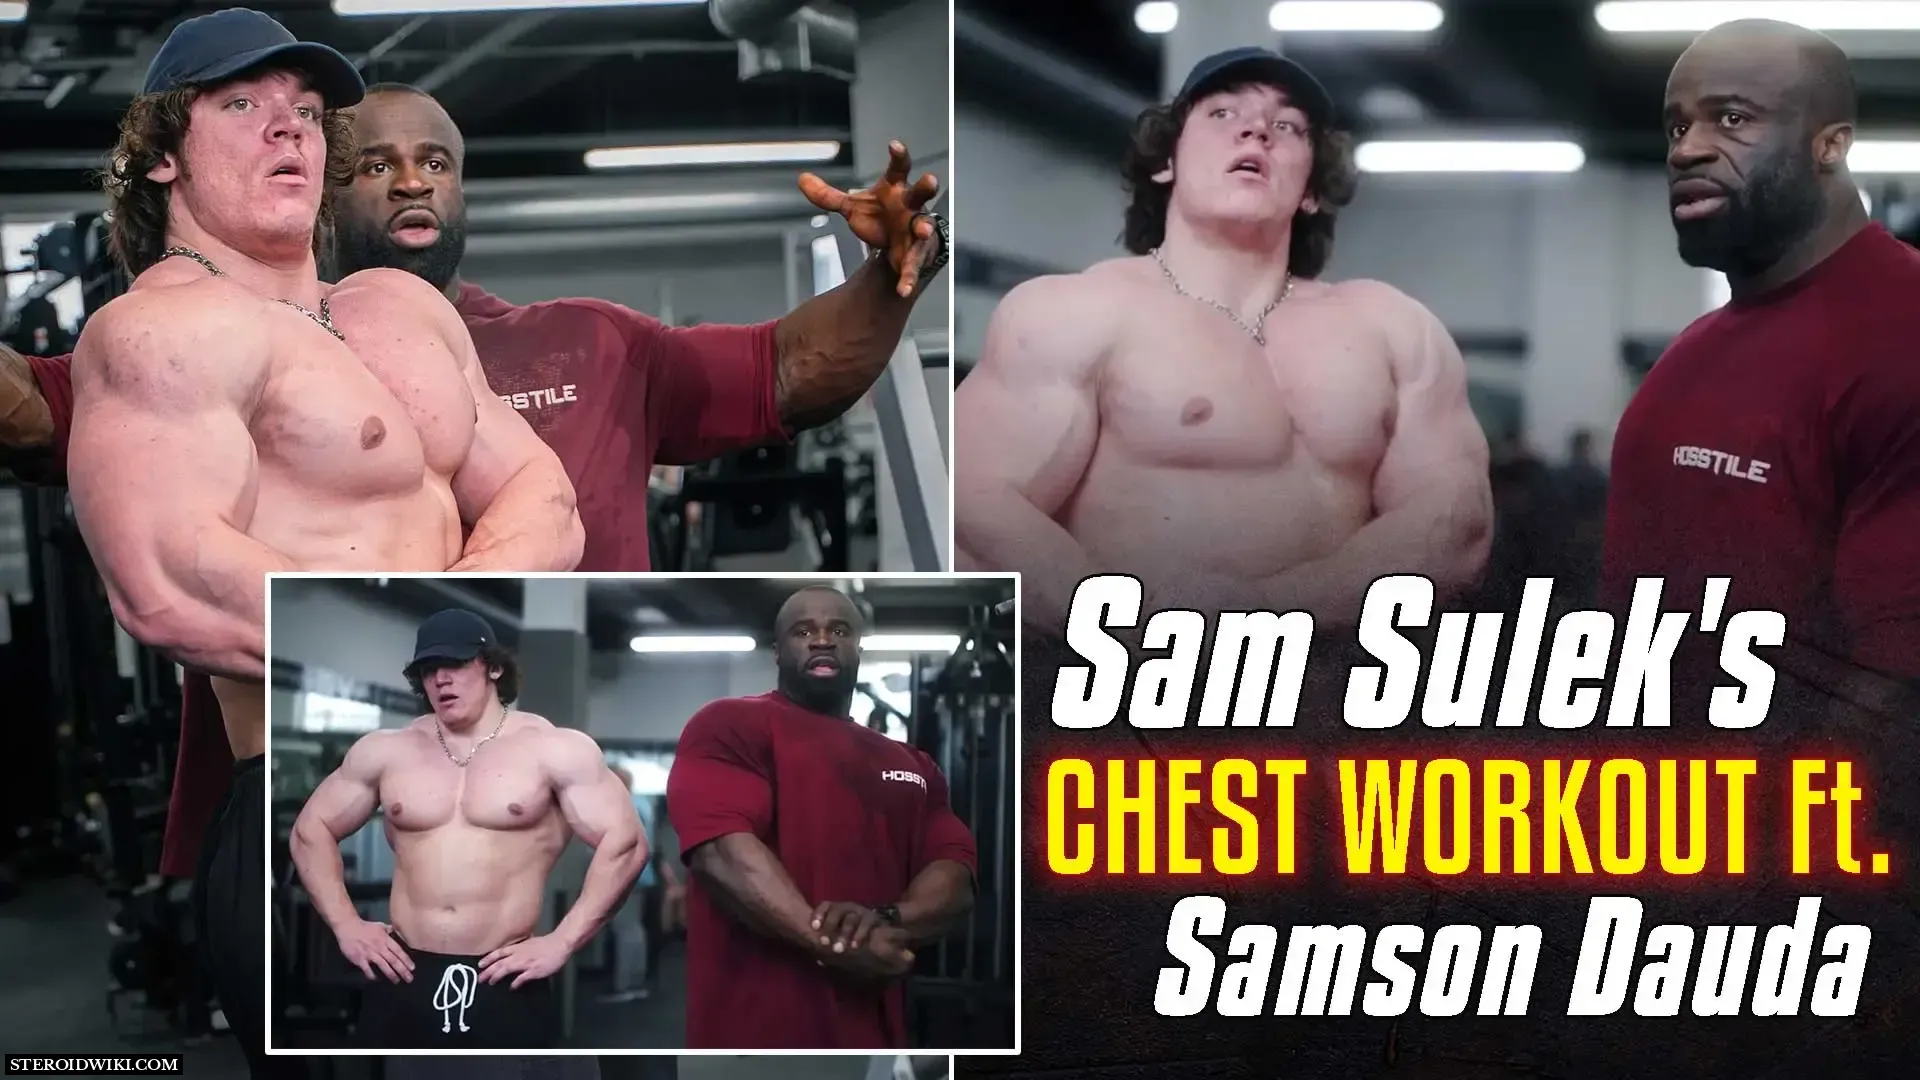 Sam Sulek chest workout ft. Samson Dauda